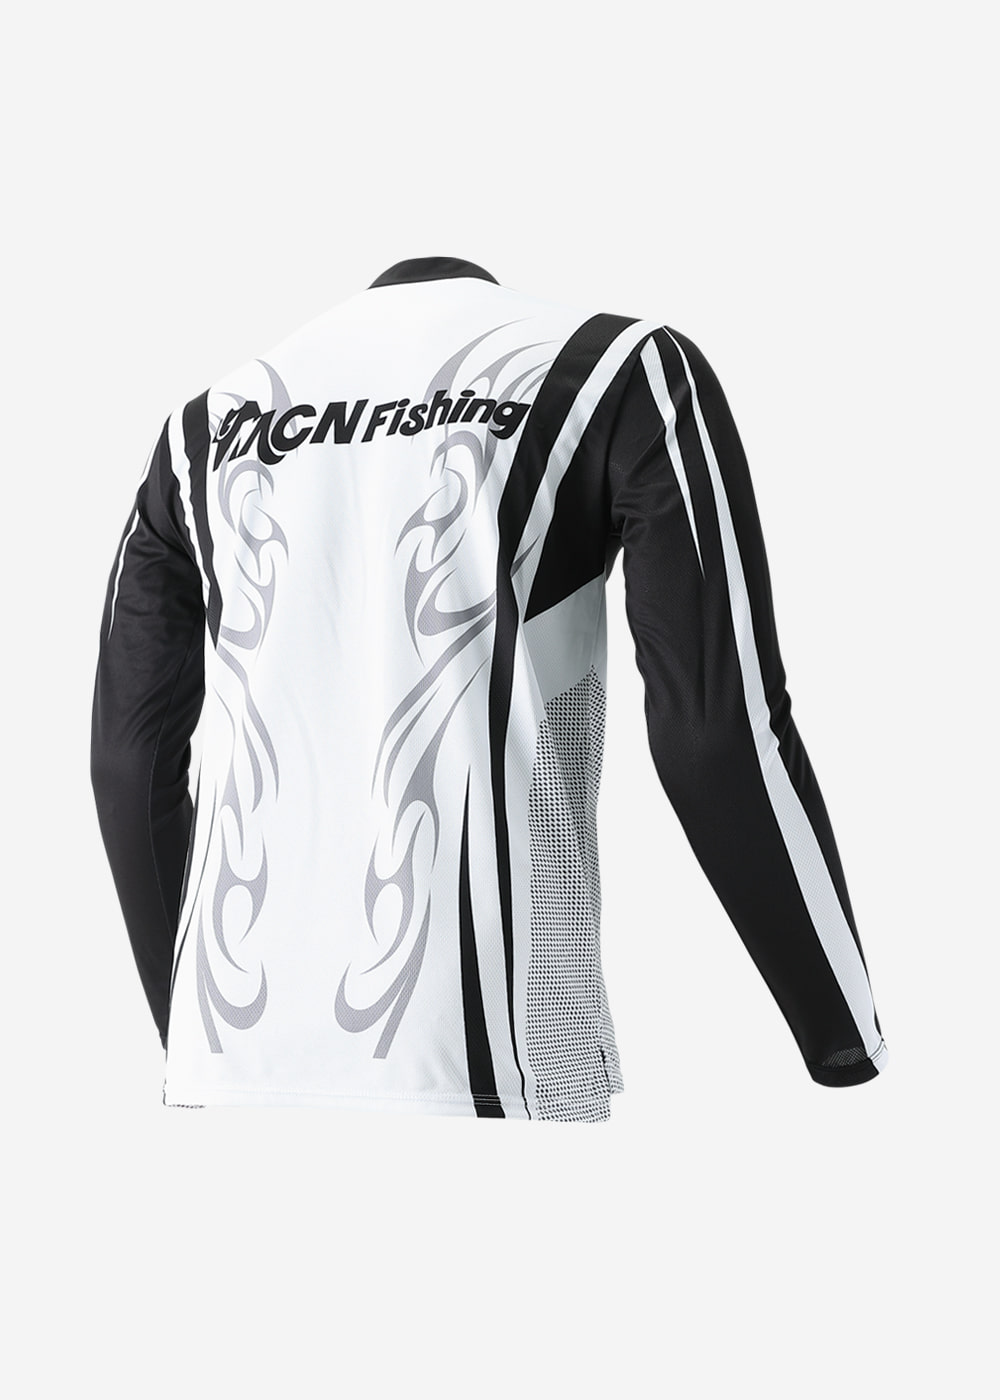 mcnfishing[MFJL-Fever white]mcn낚시단체복 피버 화이트 져지낚시복 낚시의류 낚시토너먼트 낚시팀복반집업 티셔츠 기능성 아웃도어웨어